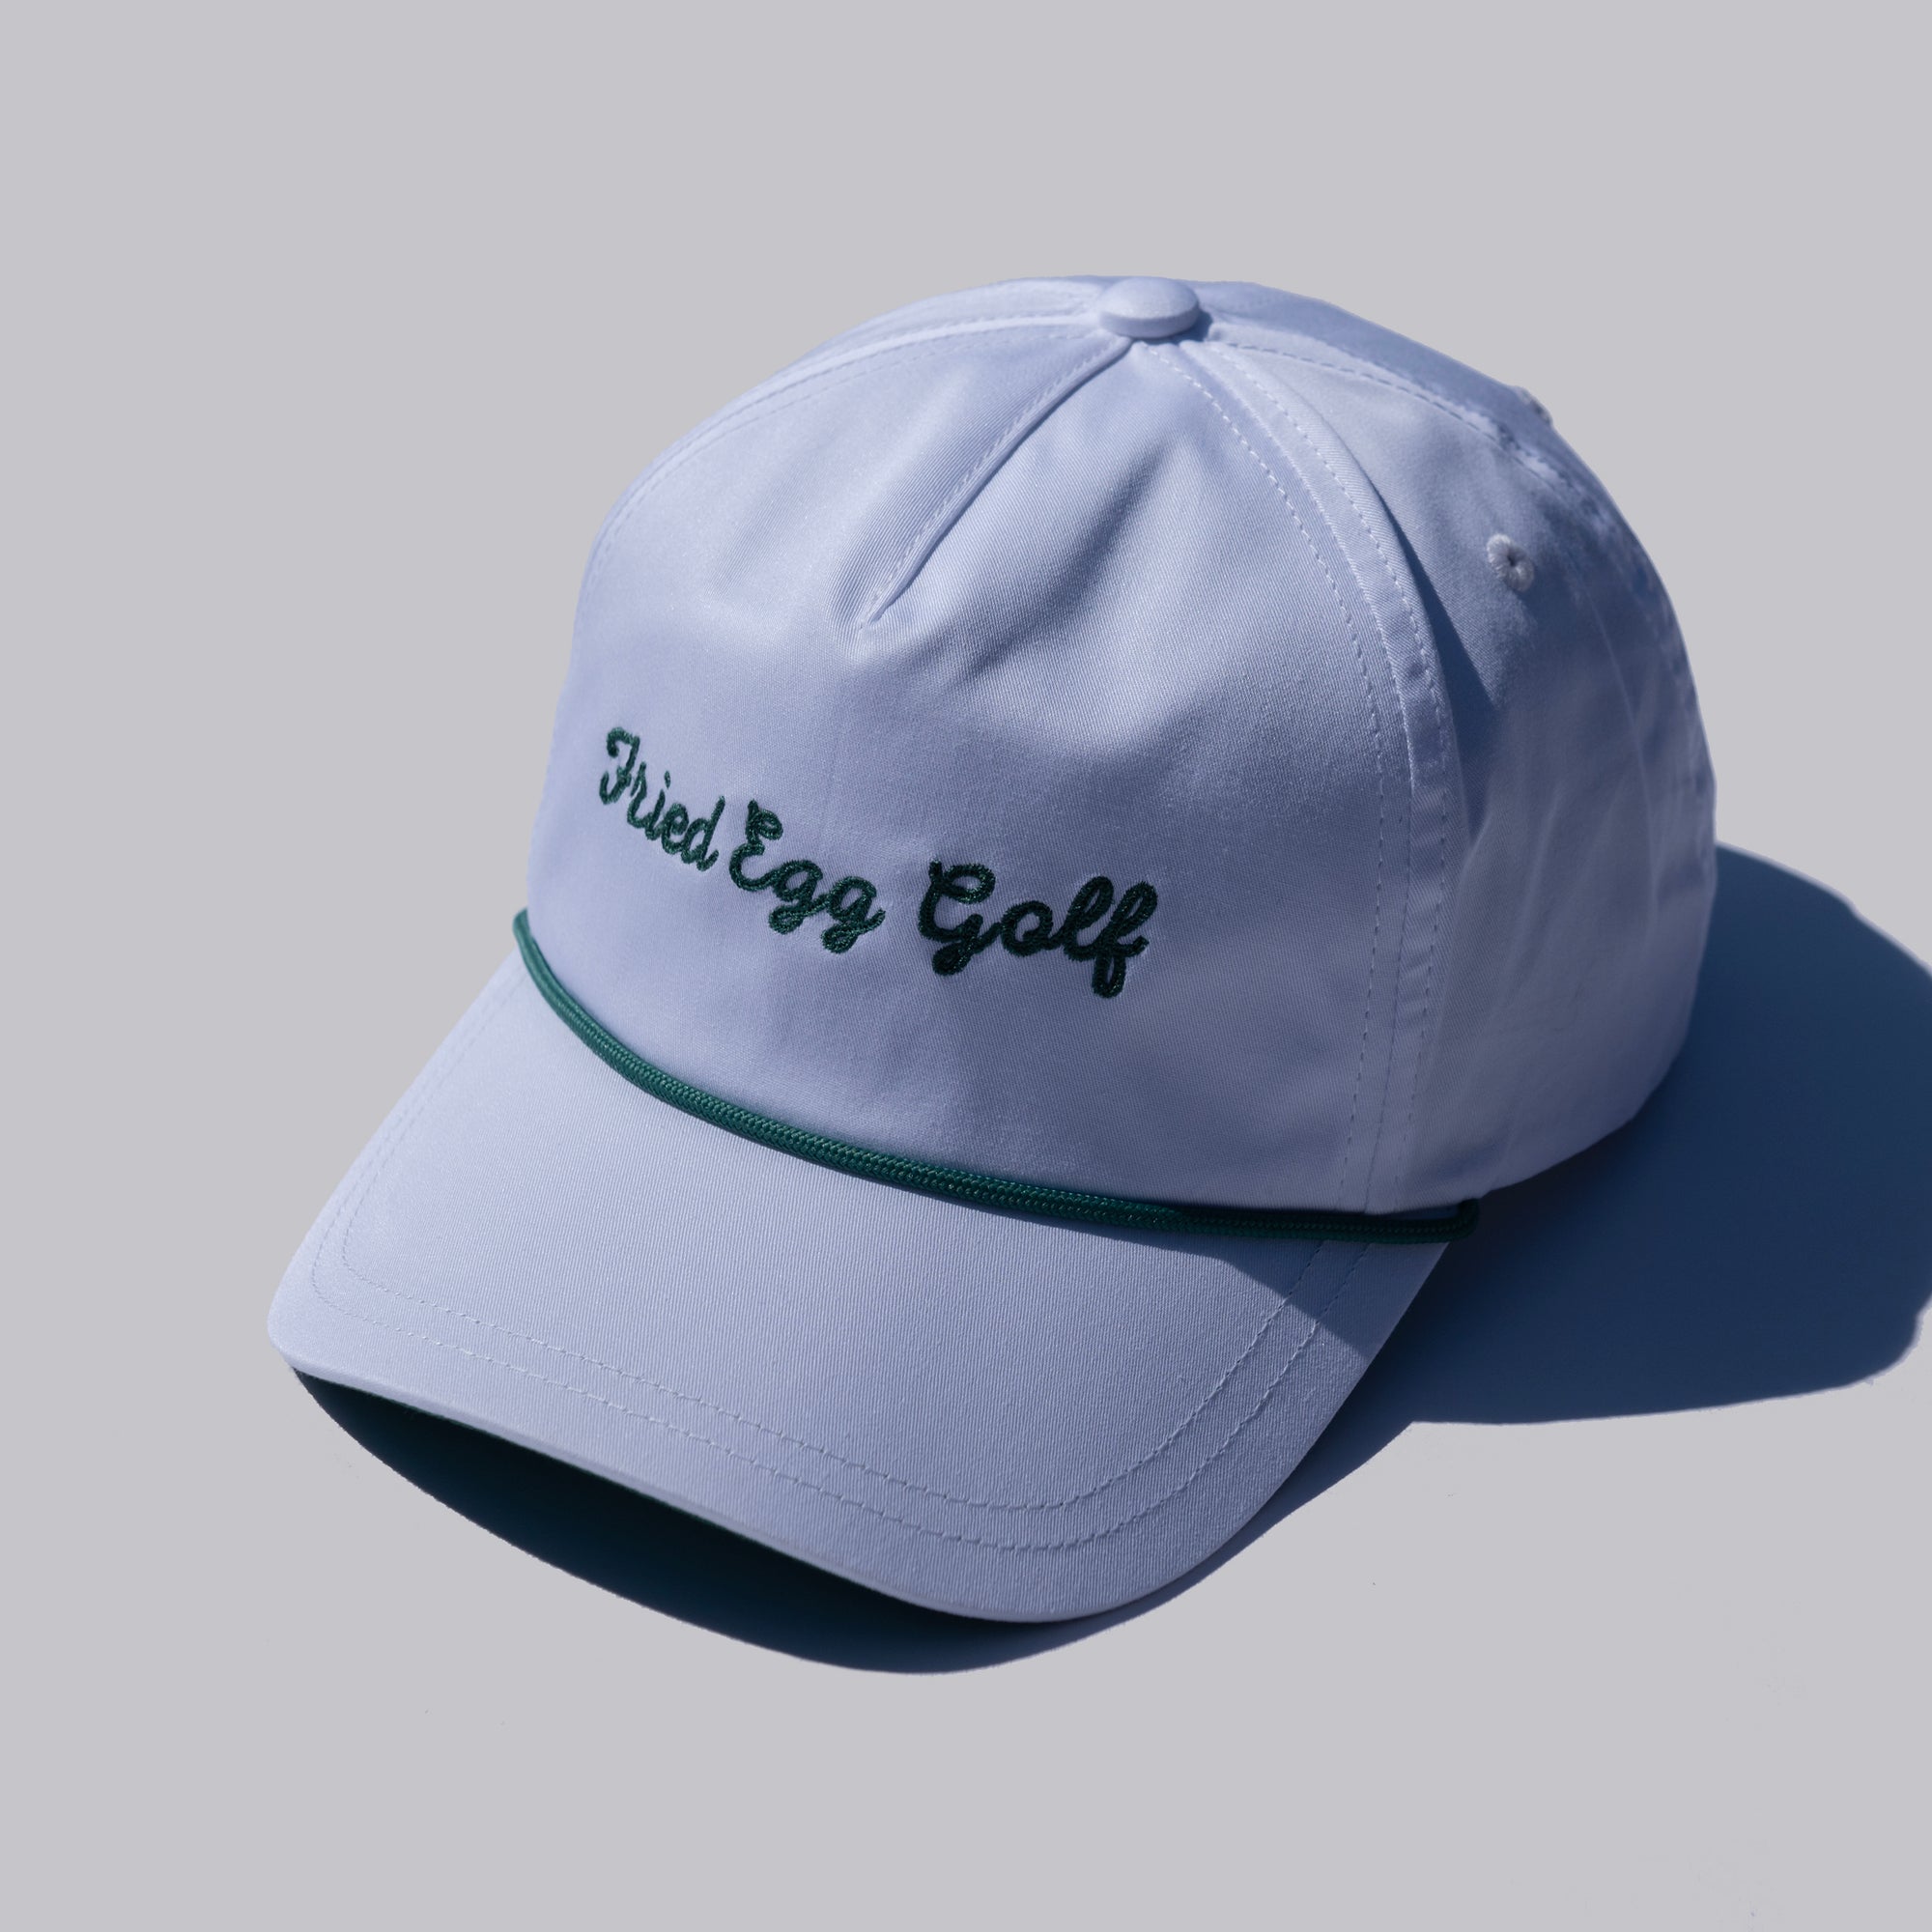 Fried Egg Golf & American Needle Lightweight Rope Hat - White/Dark Green